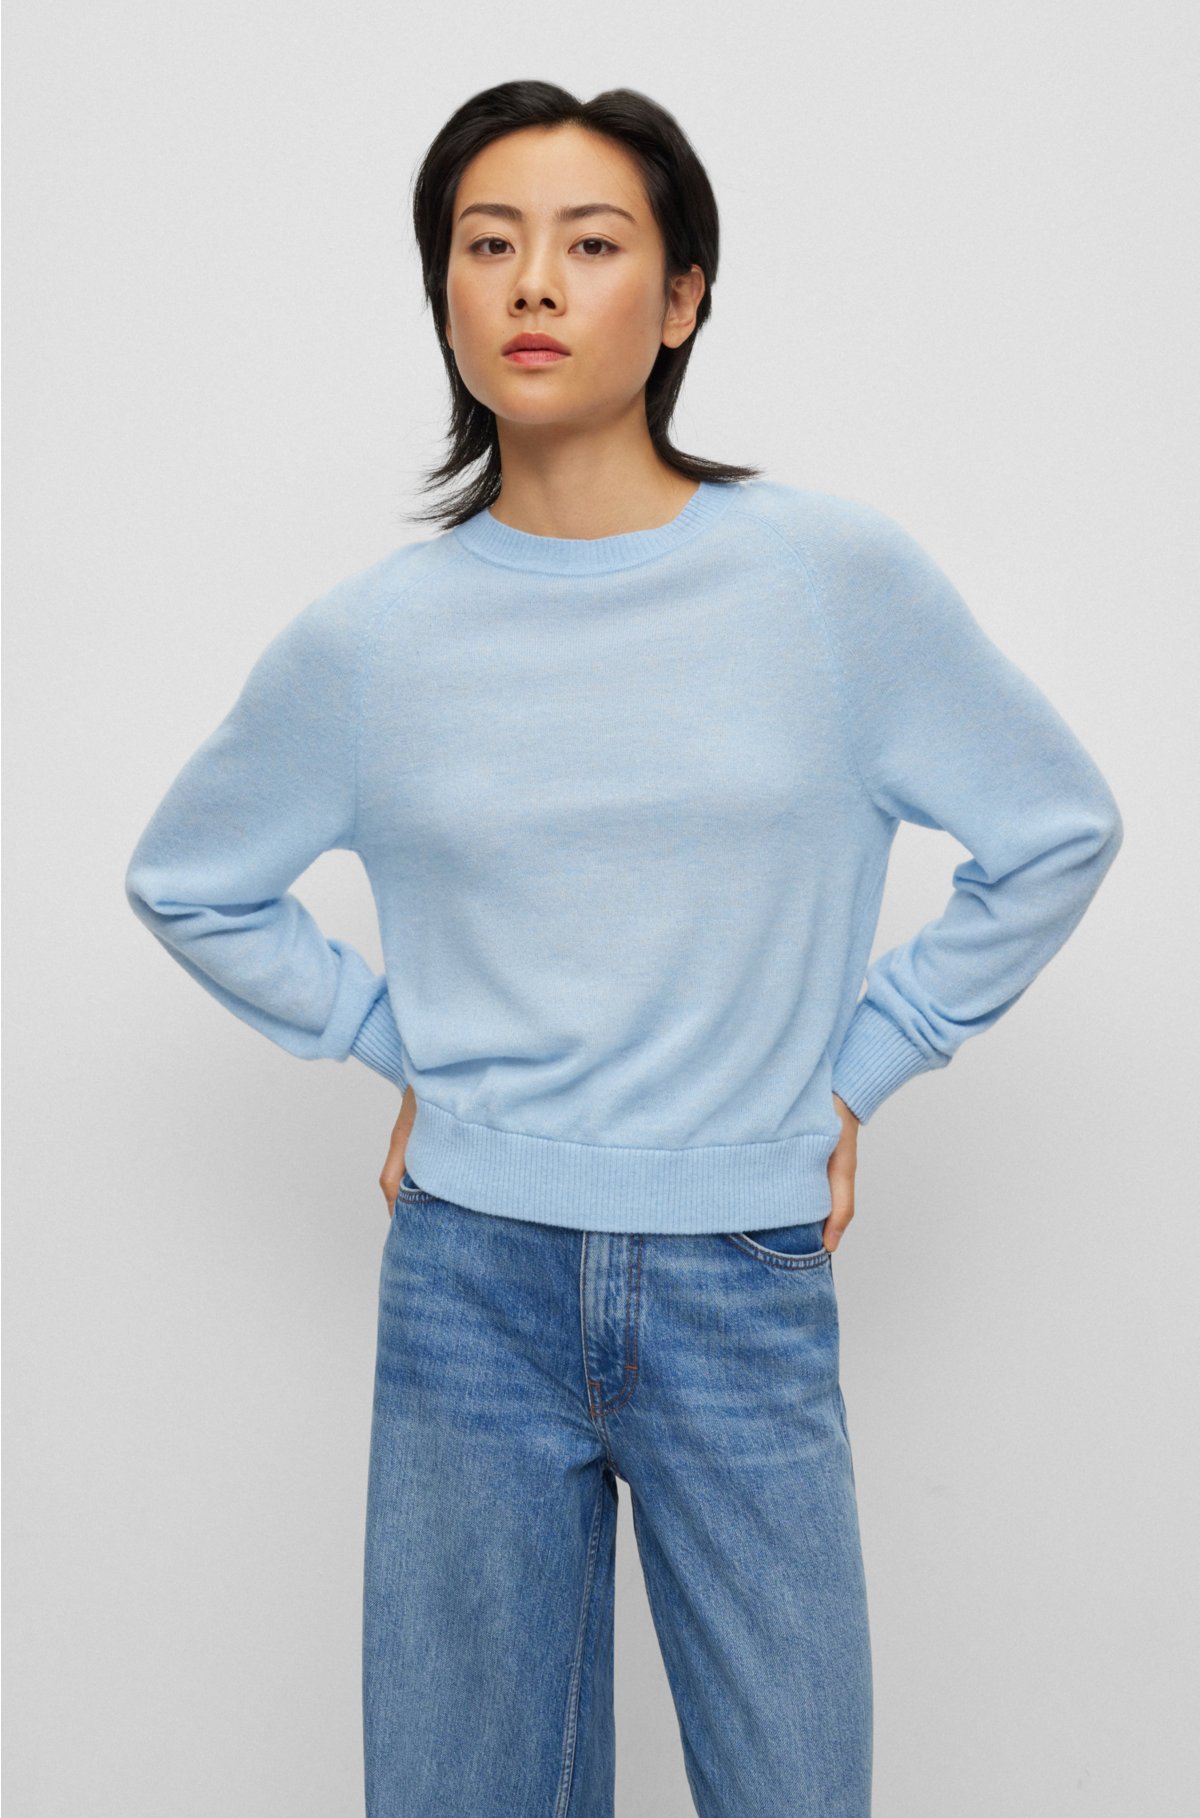 Super Soft Sweatshirt in Light Blue